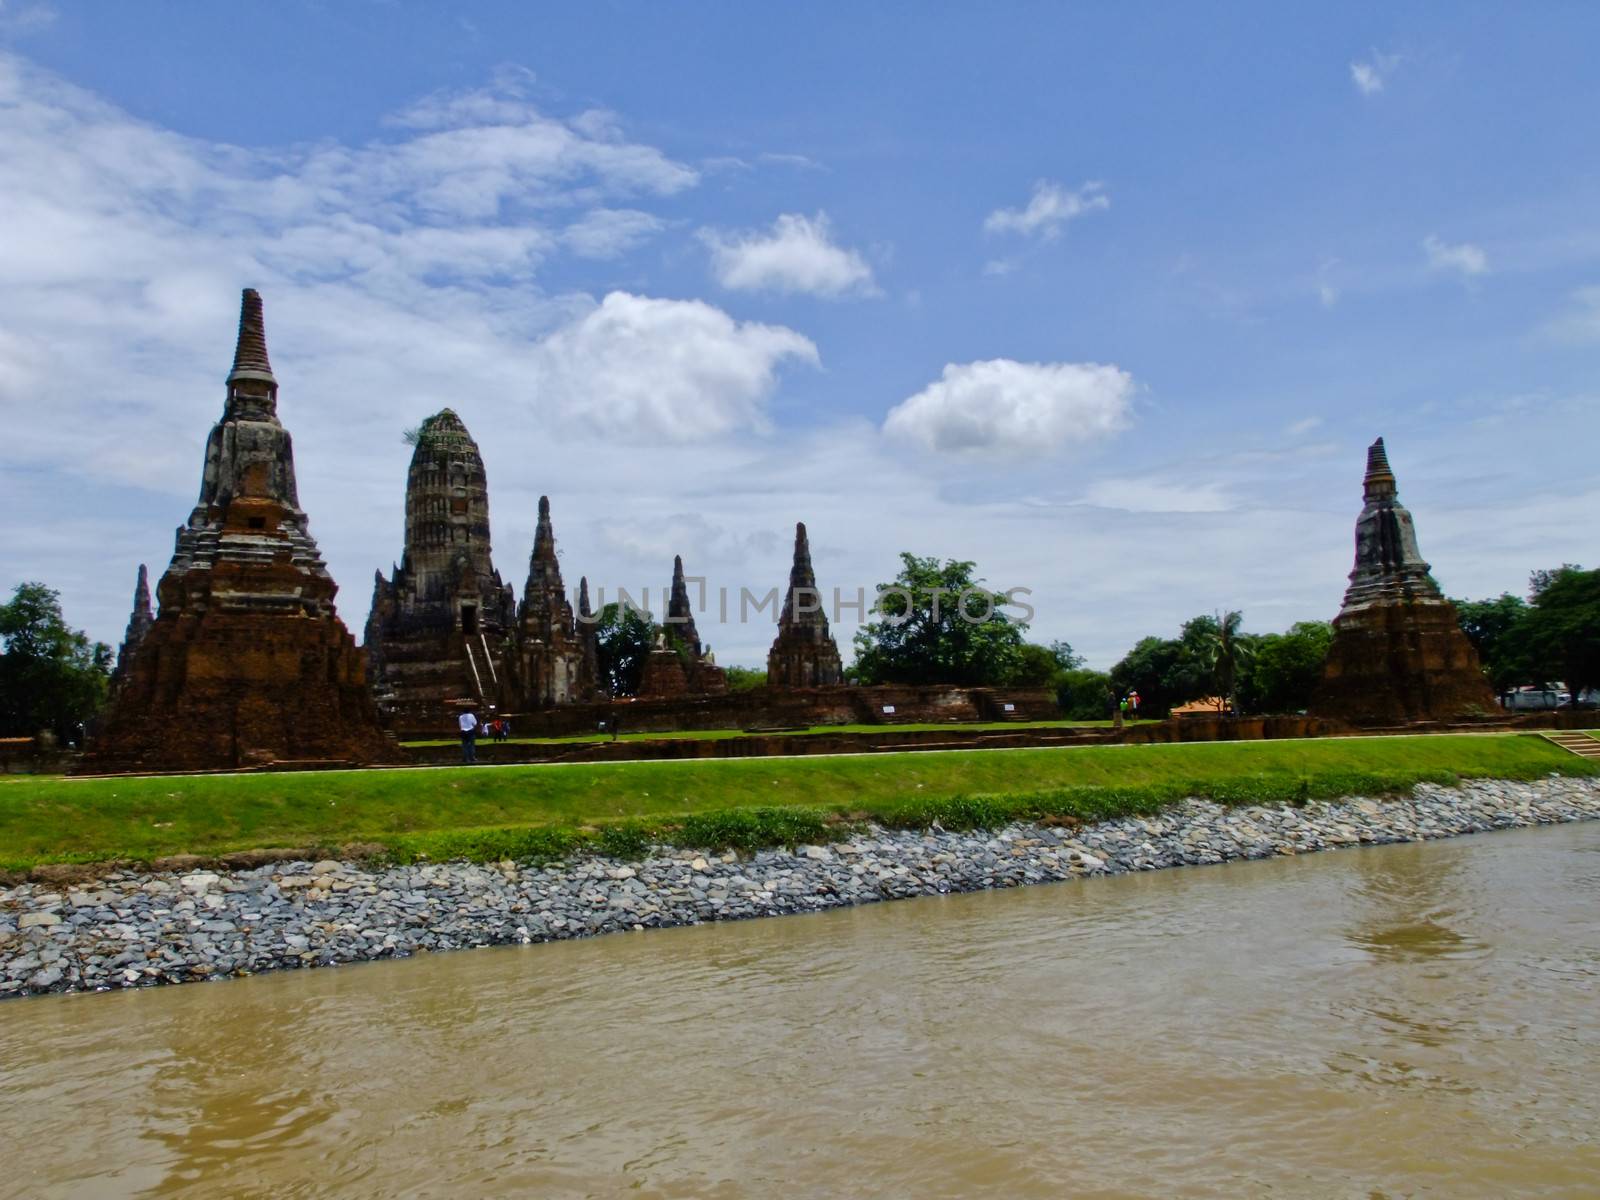 Chaiwatthanaram buddhist monastery on the bank of Chaopraya river in Ayutthaya, old capital city, in Thailand